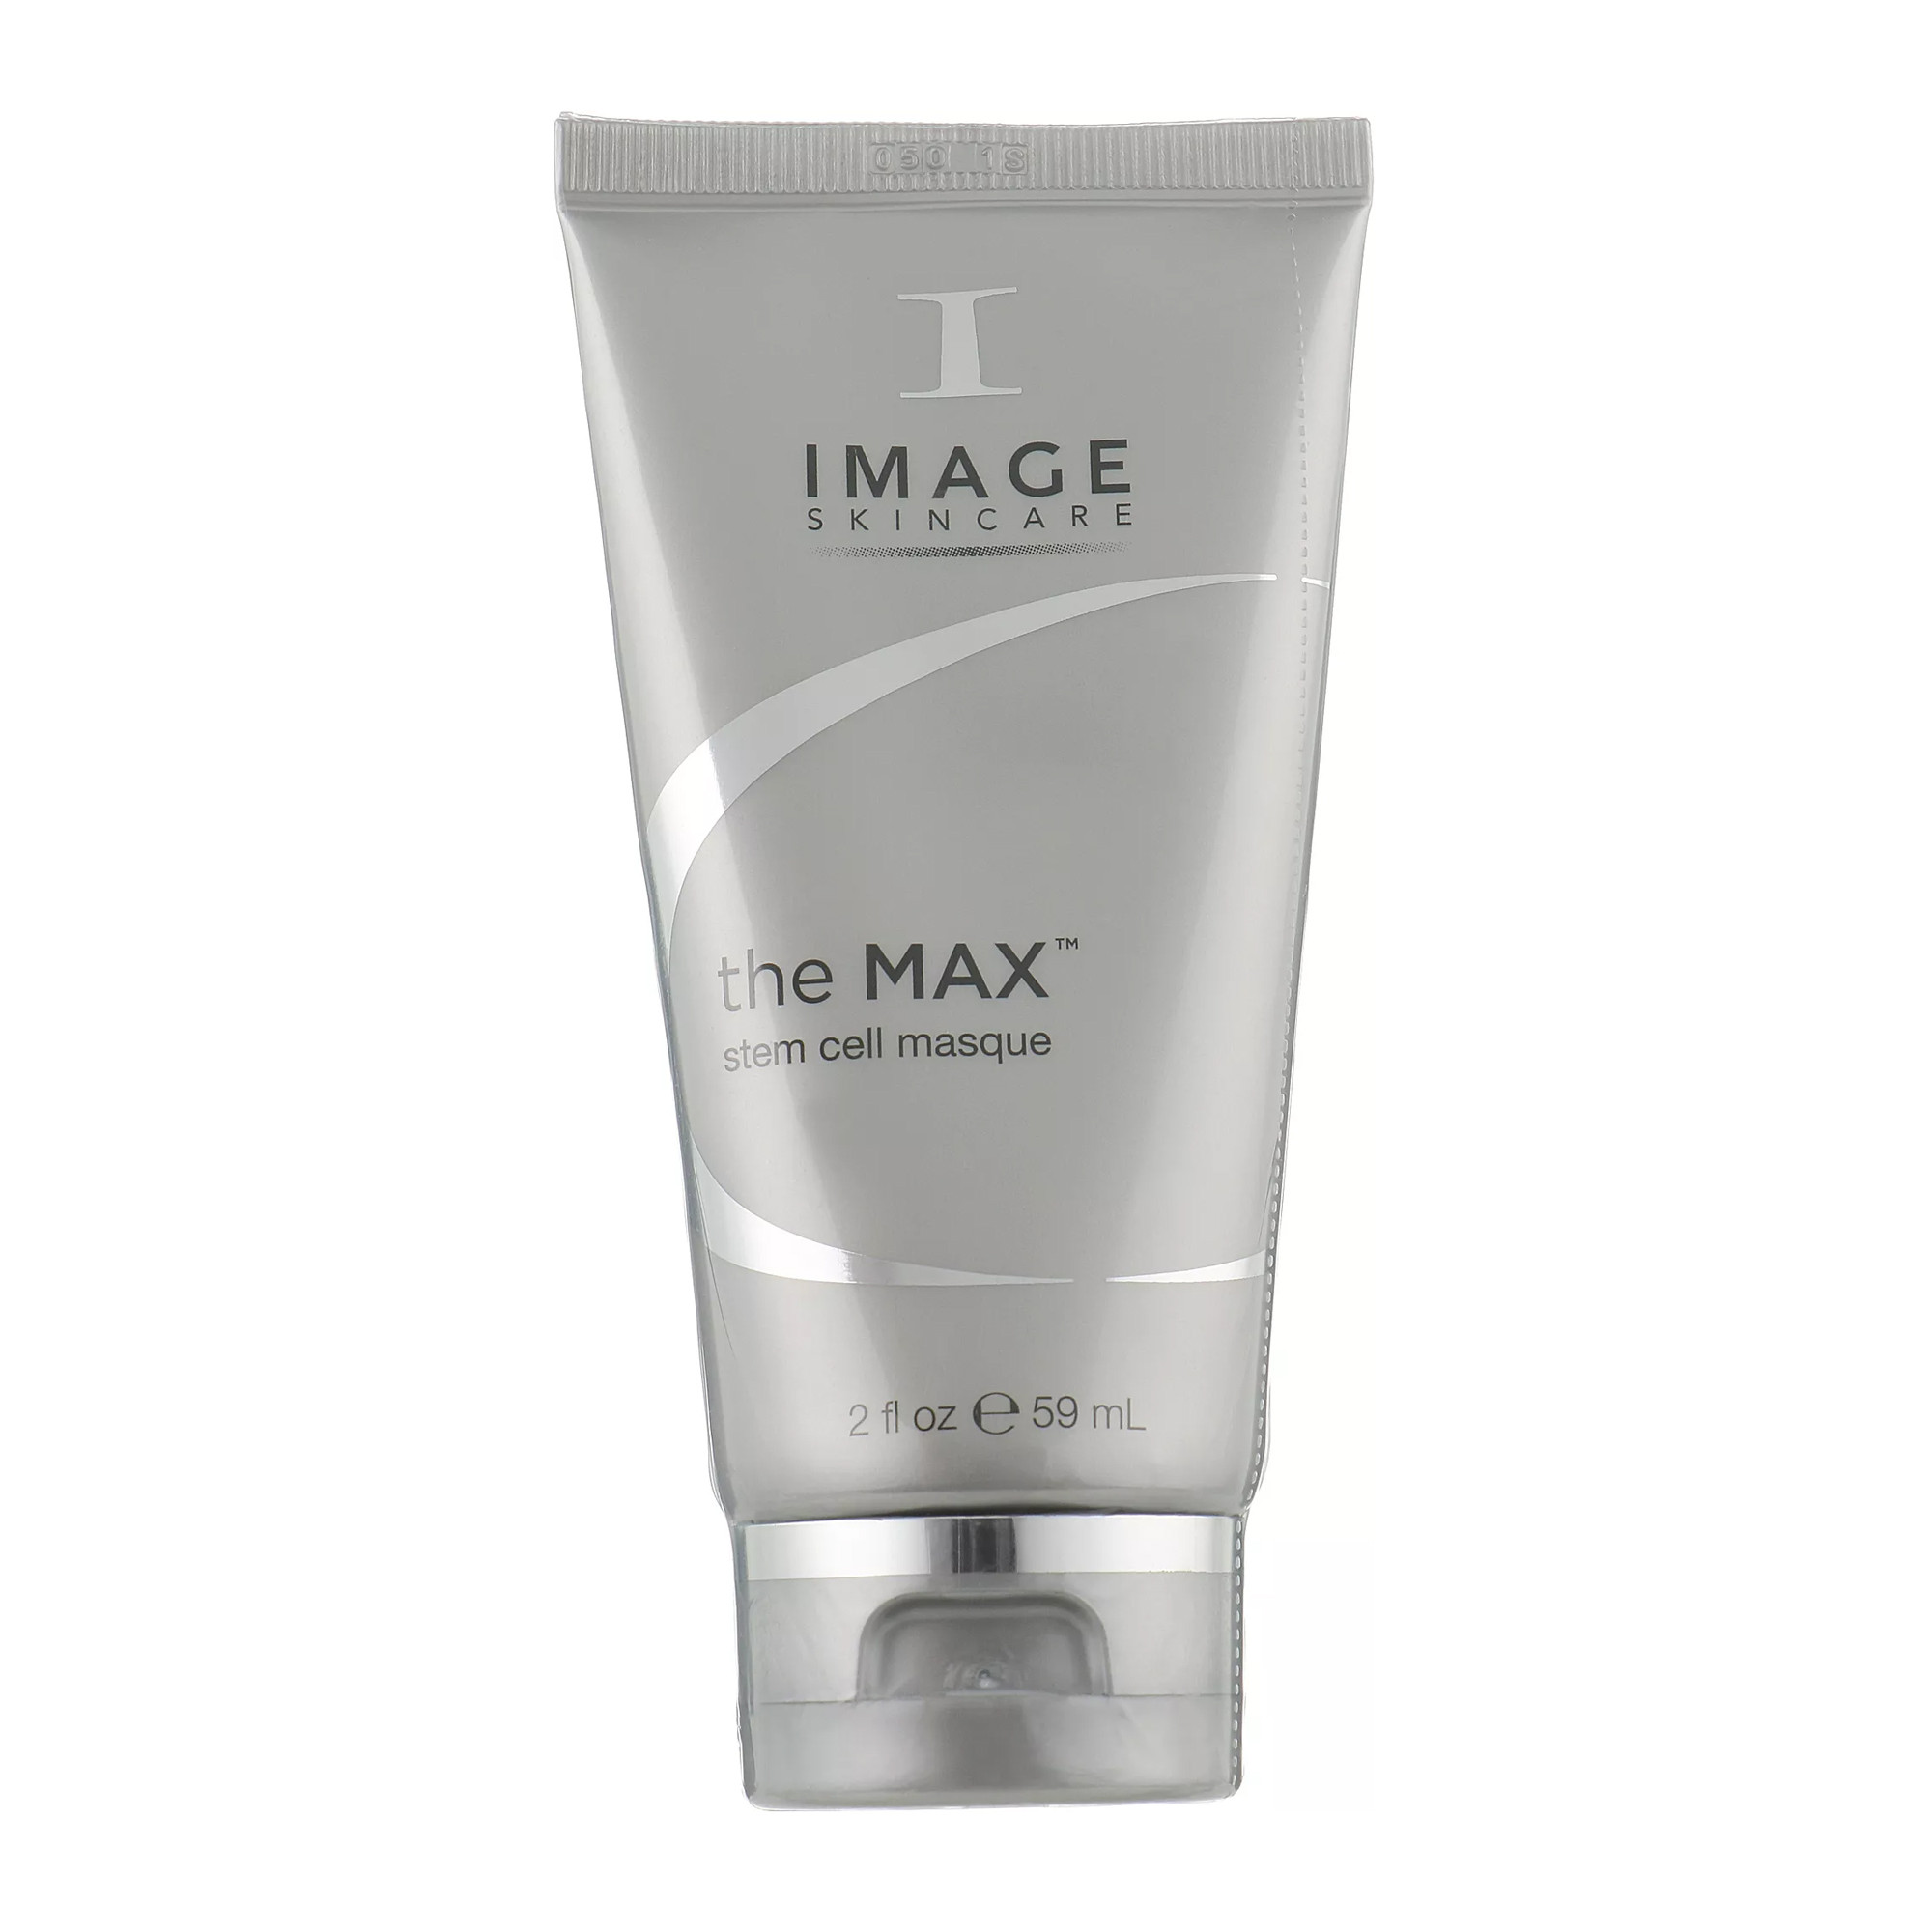 Image Skincare The Max Stem Cell Masque Омолоджувальна маска